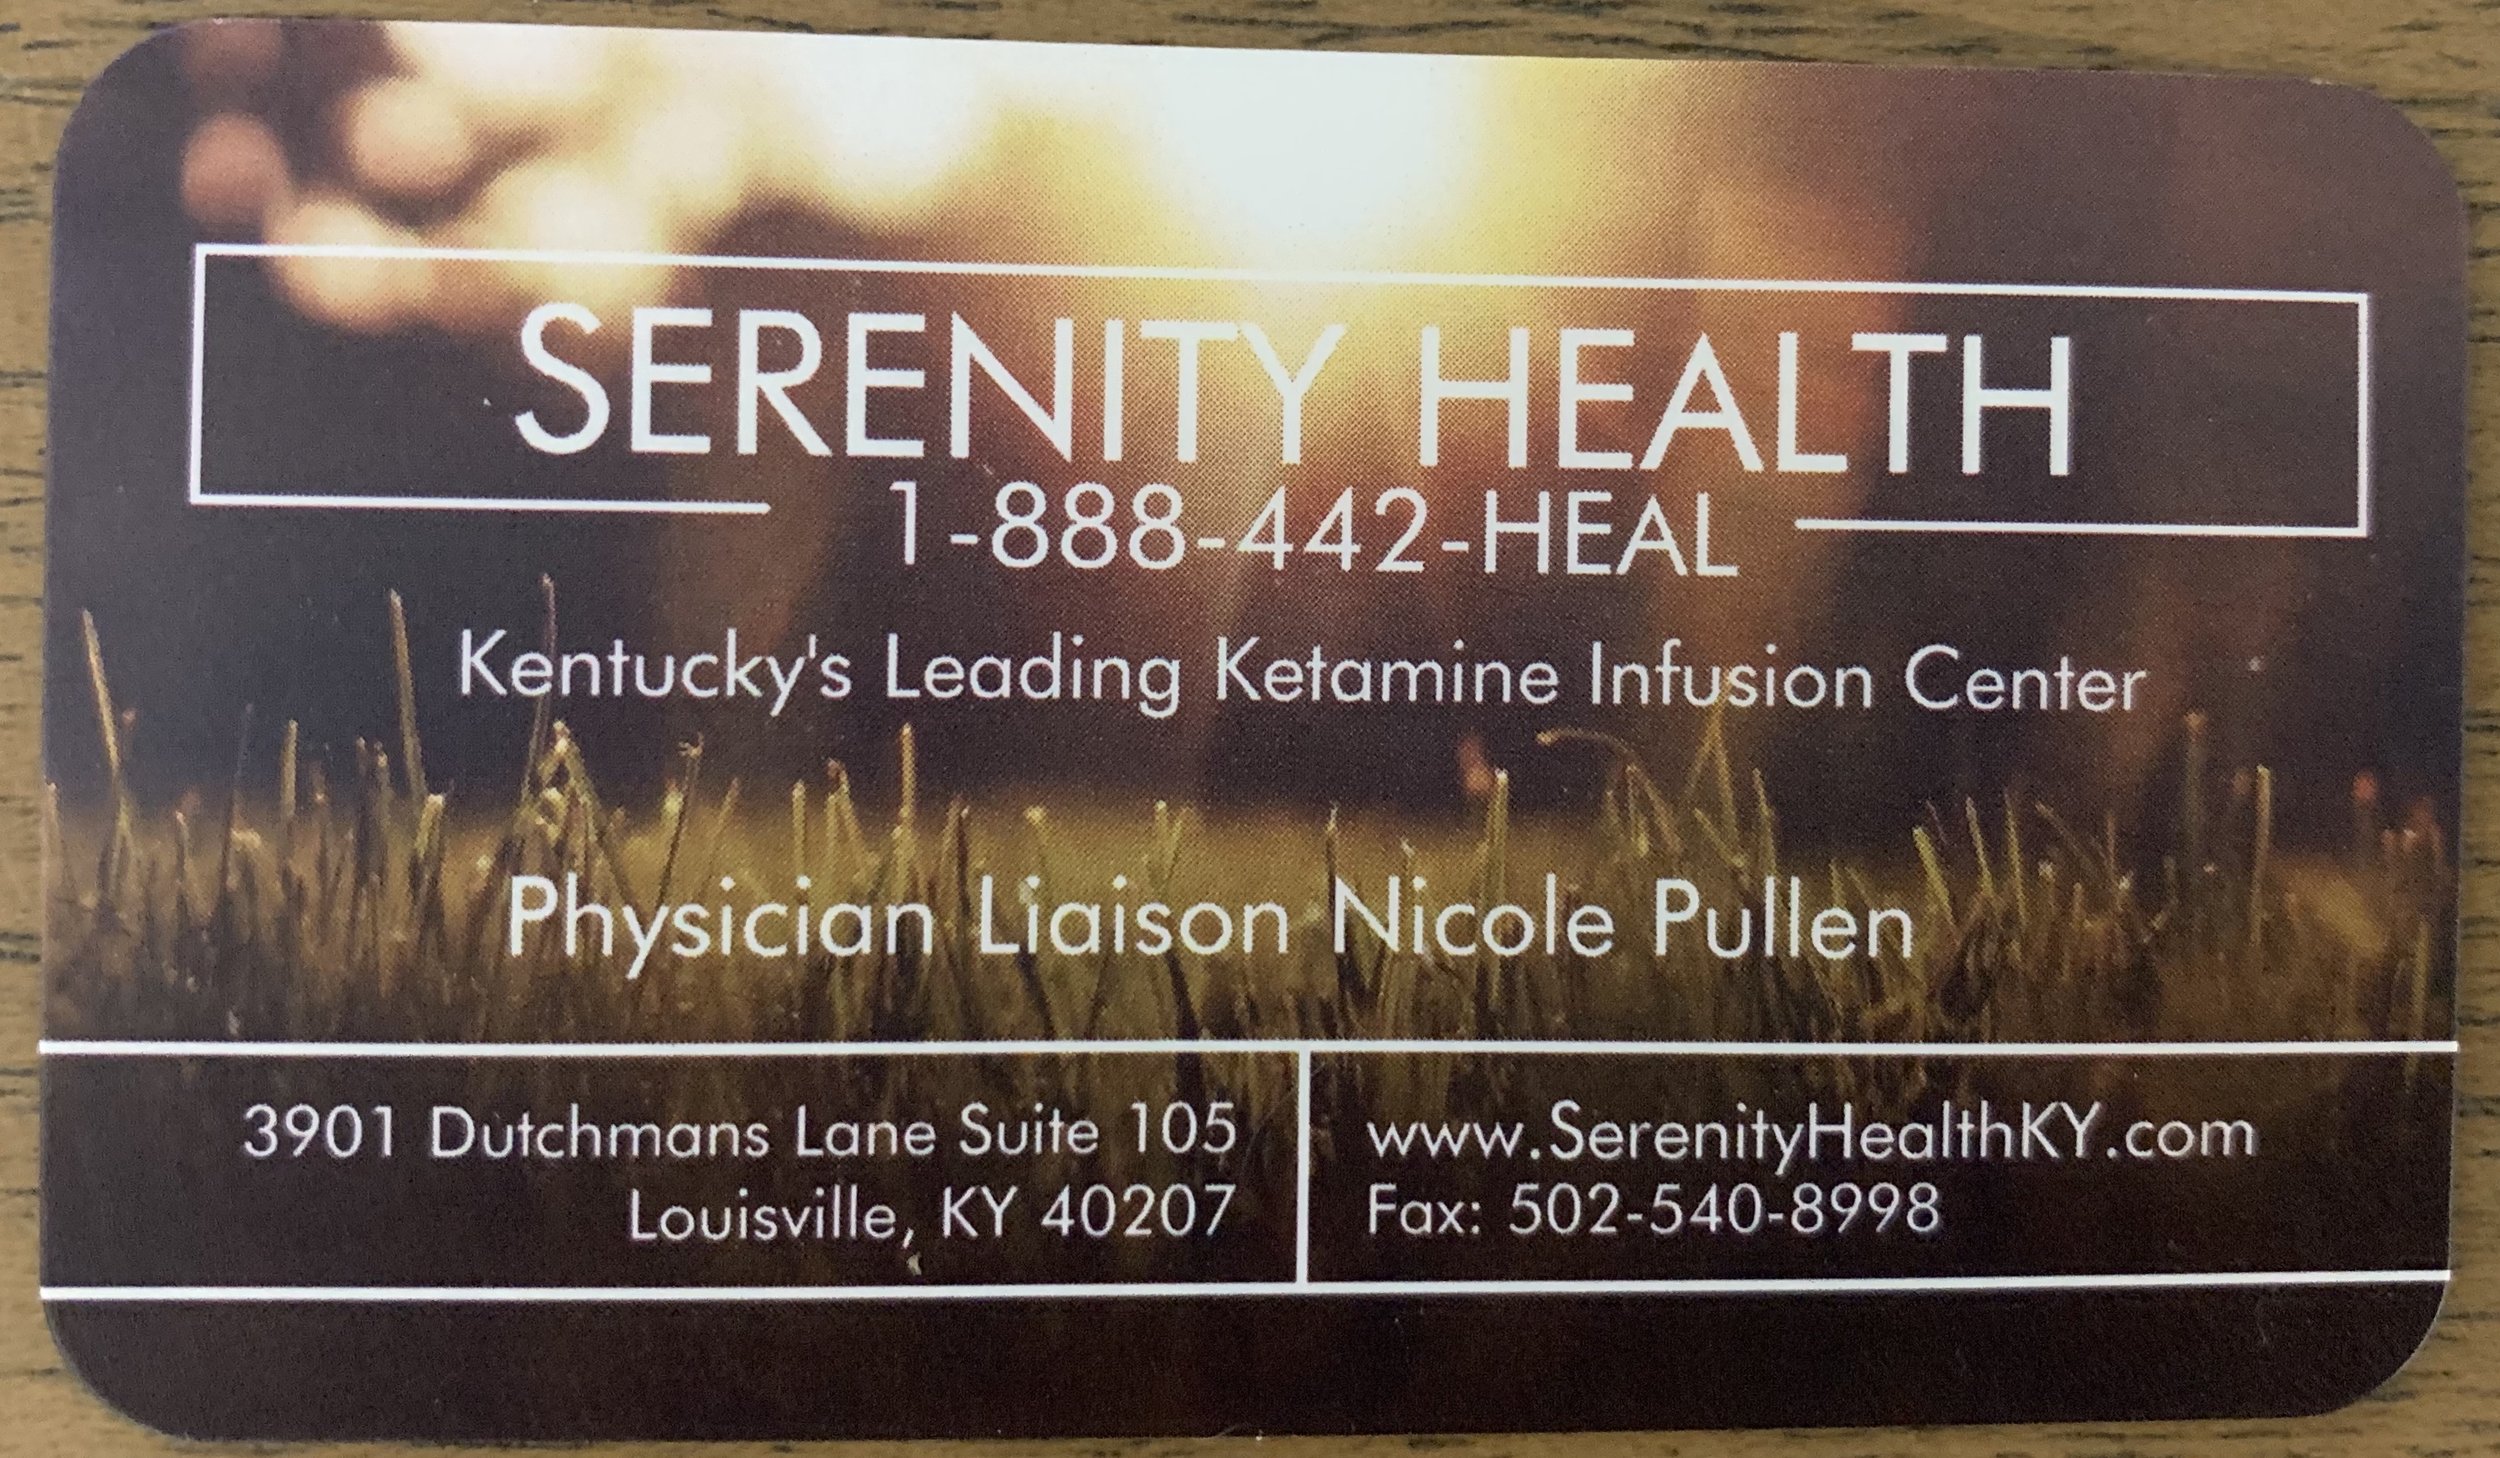 Serenity Health, Kentucky's Leading Ketamin Infusion Center, Nicole Pullen